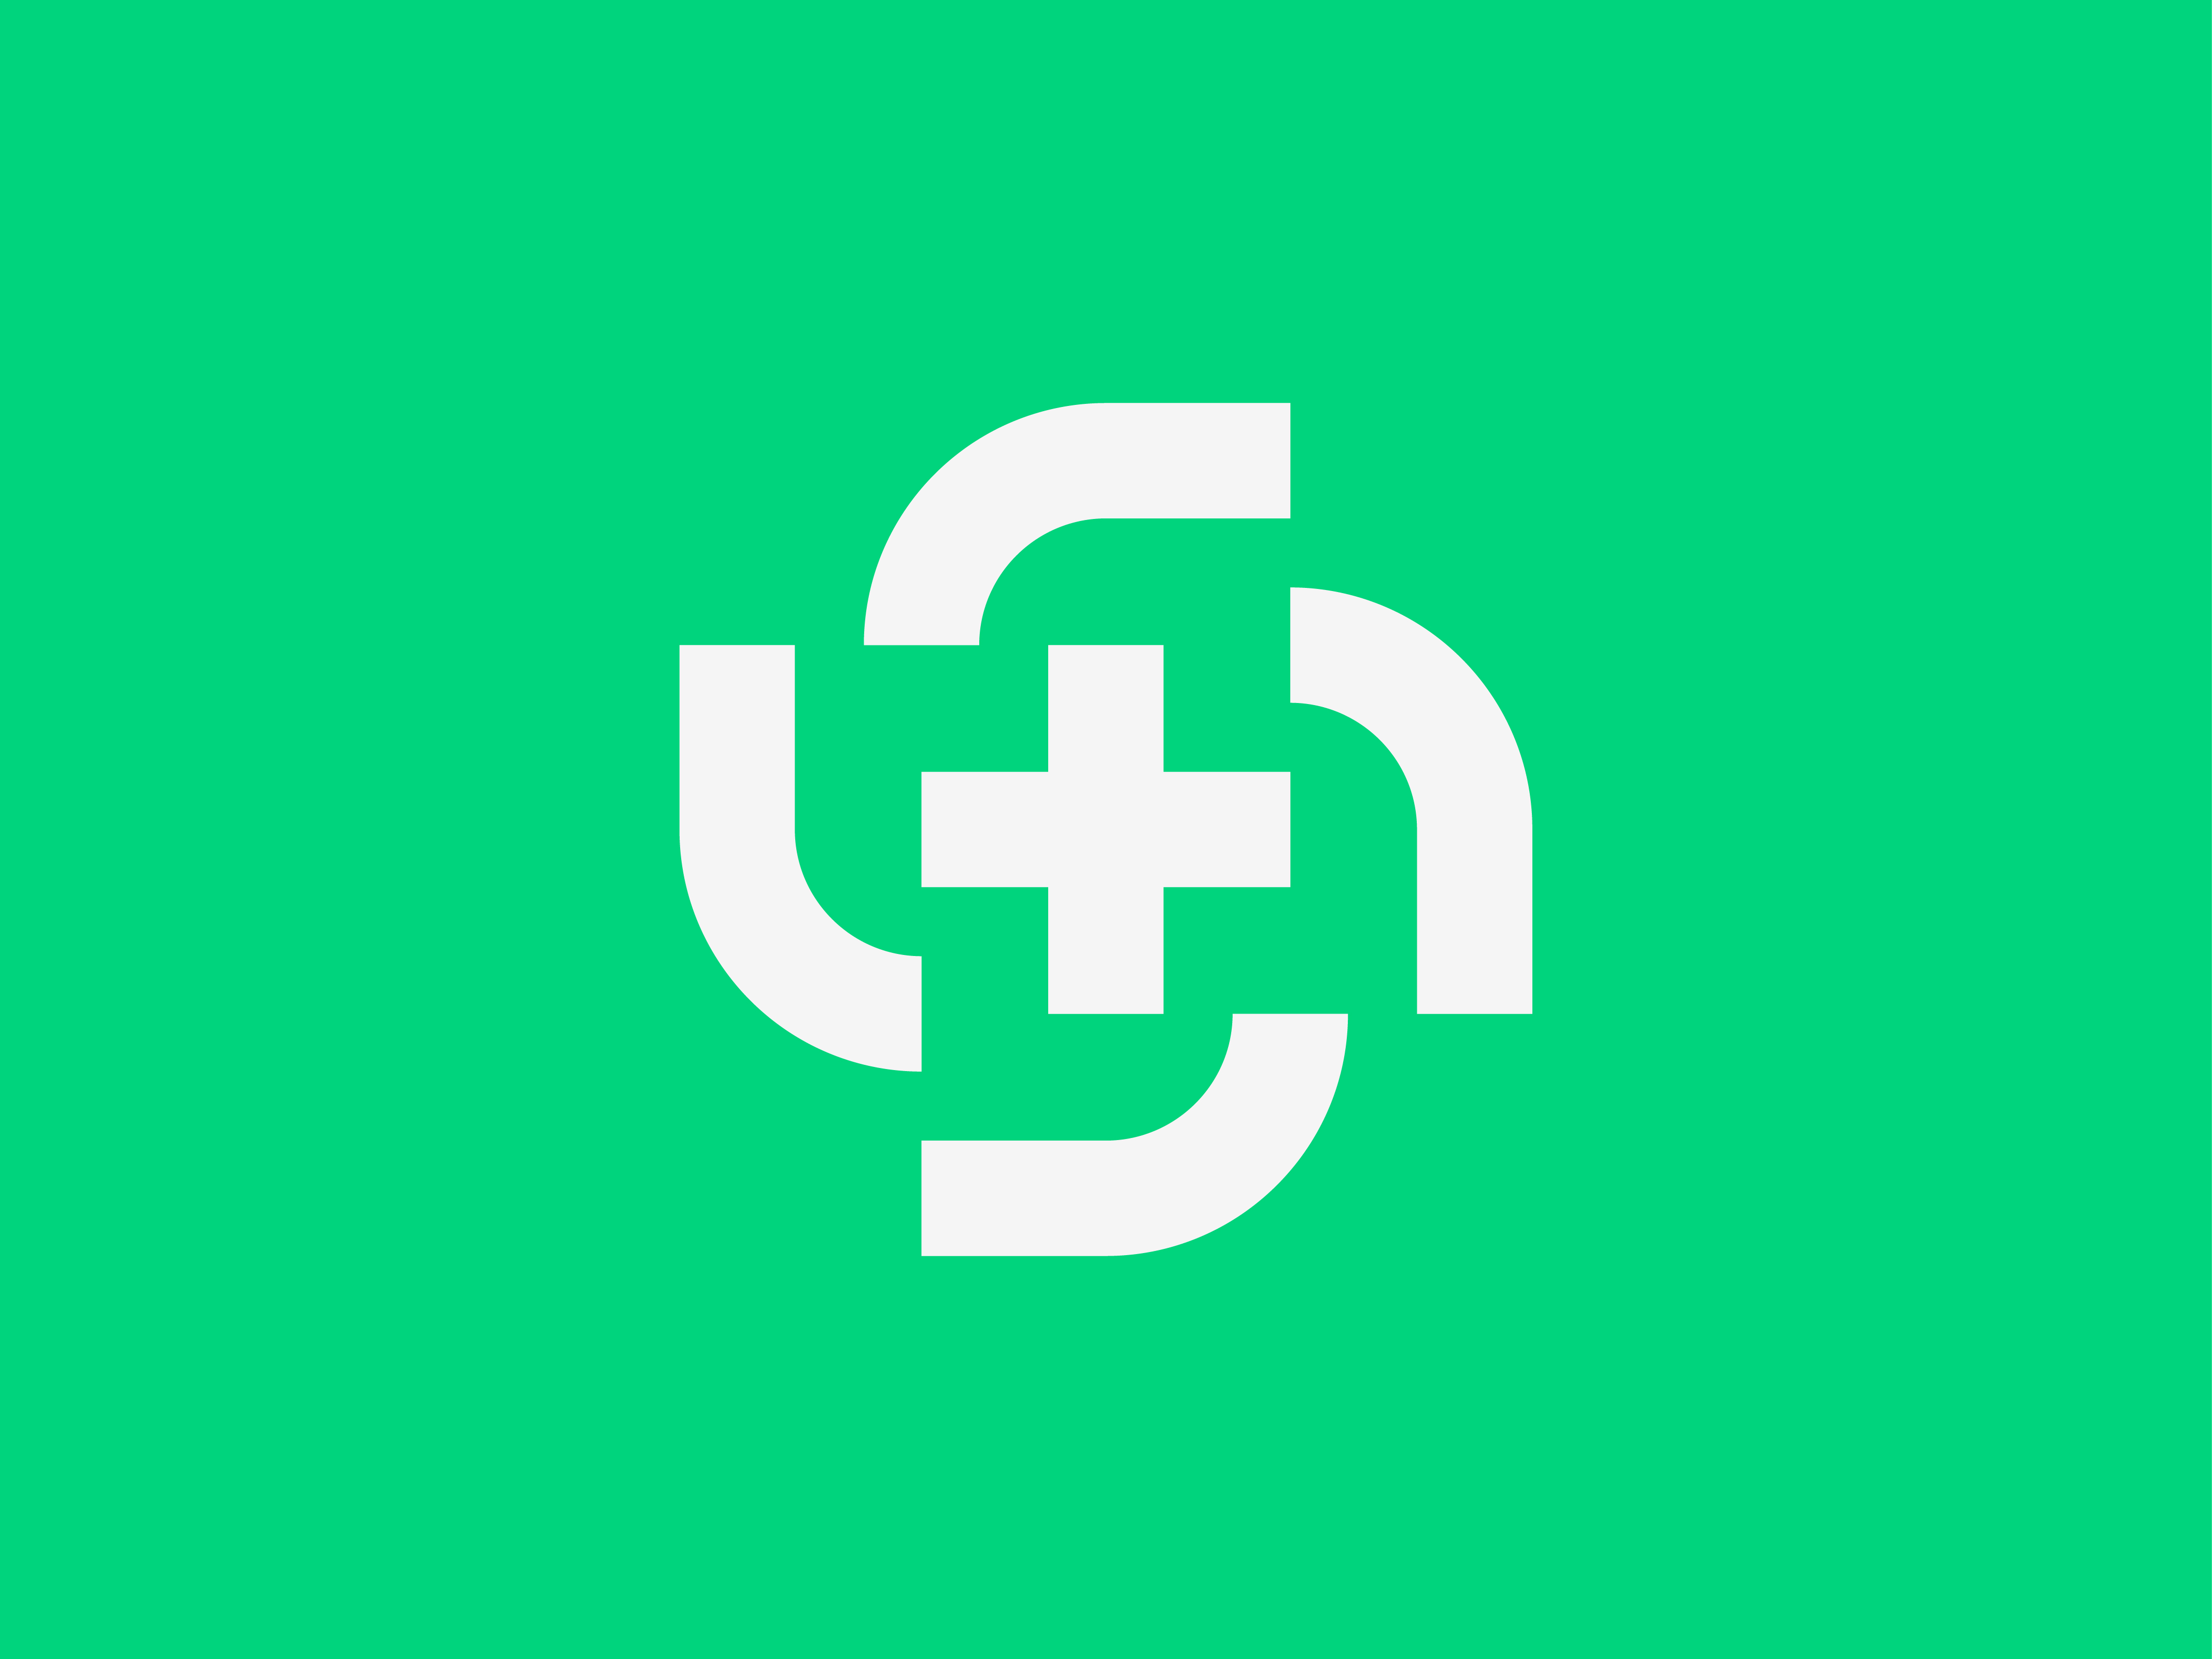 Hospital Logos - 178+ Best Hospital Logo Ideas. Free Hospital Logo Maker.